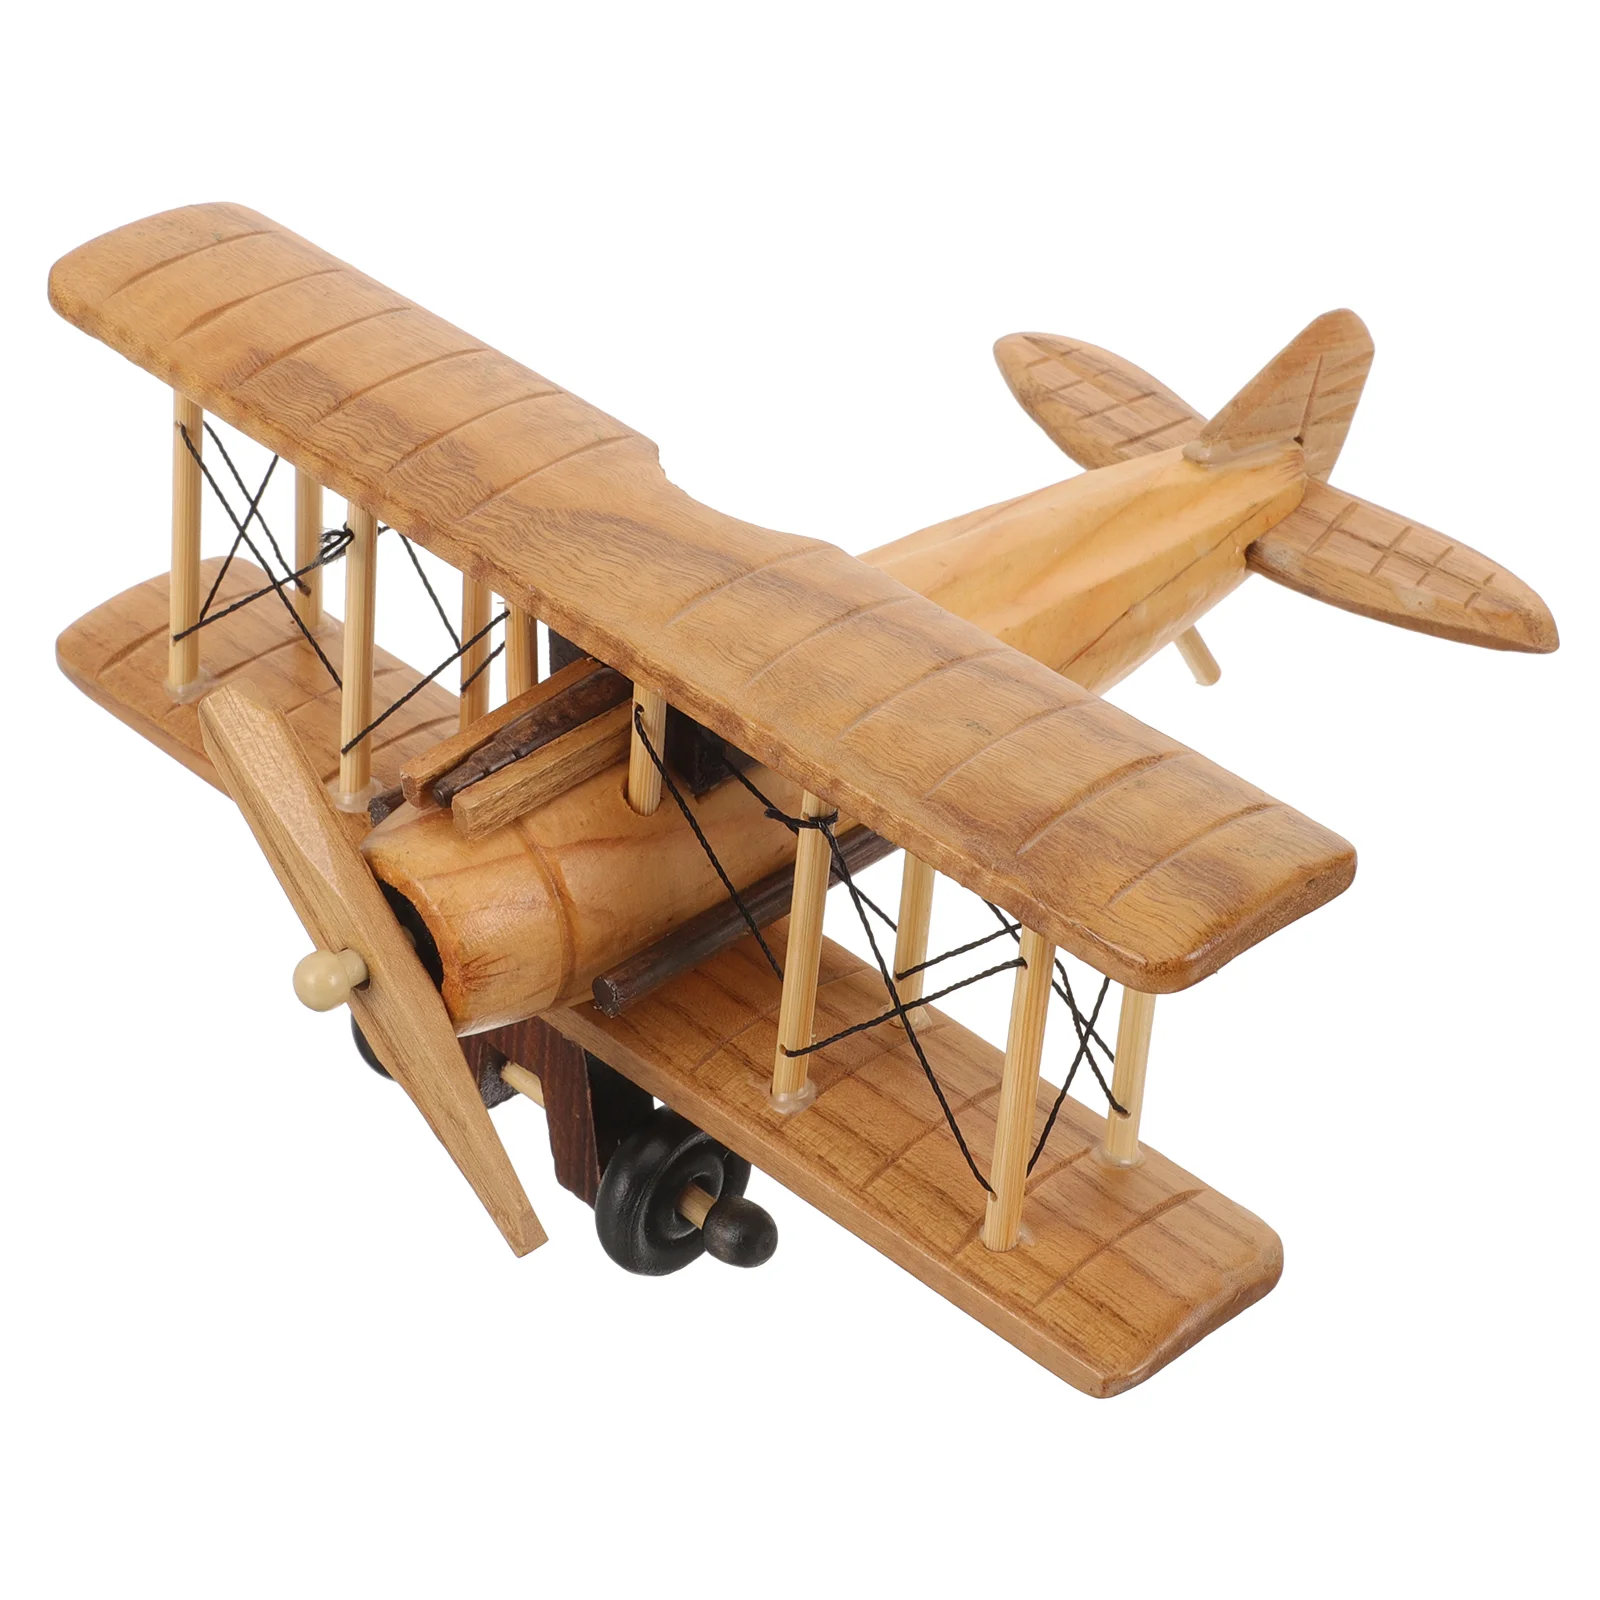 

Retro Wooden Plane Toys Vintage Model Crafts Airplane Room Decor Ornament Miniature